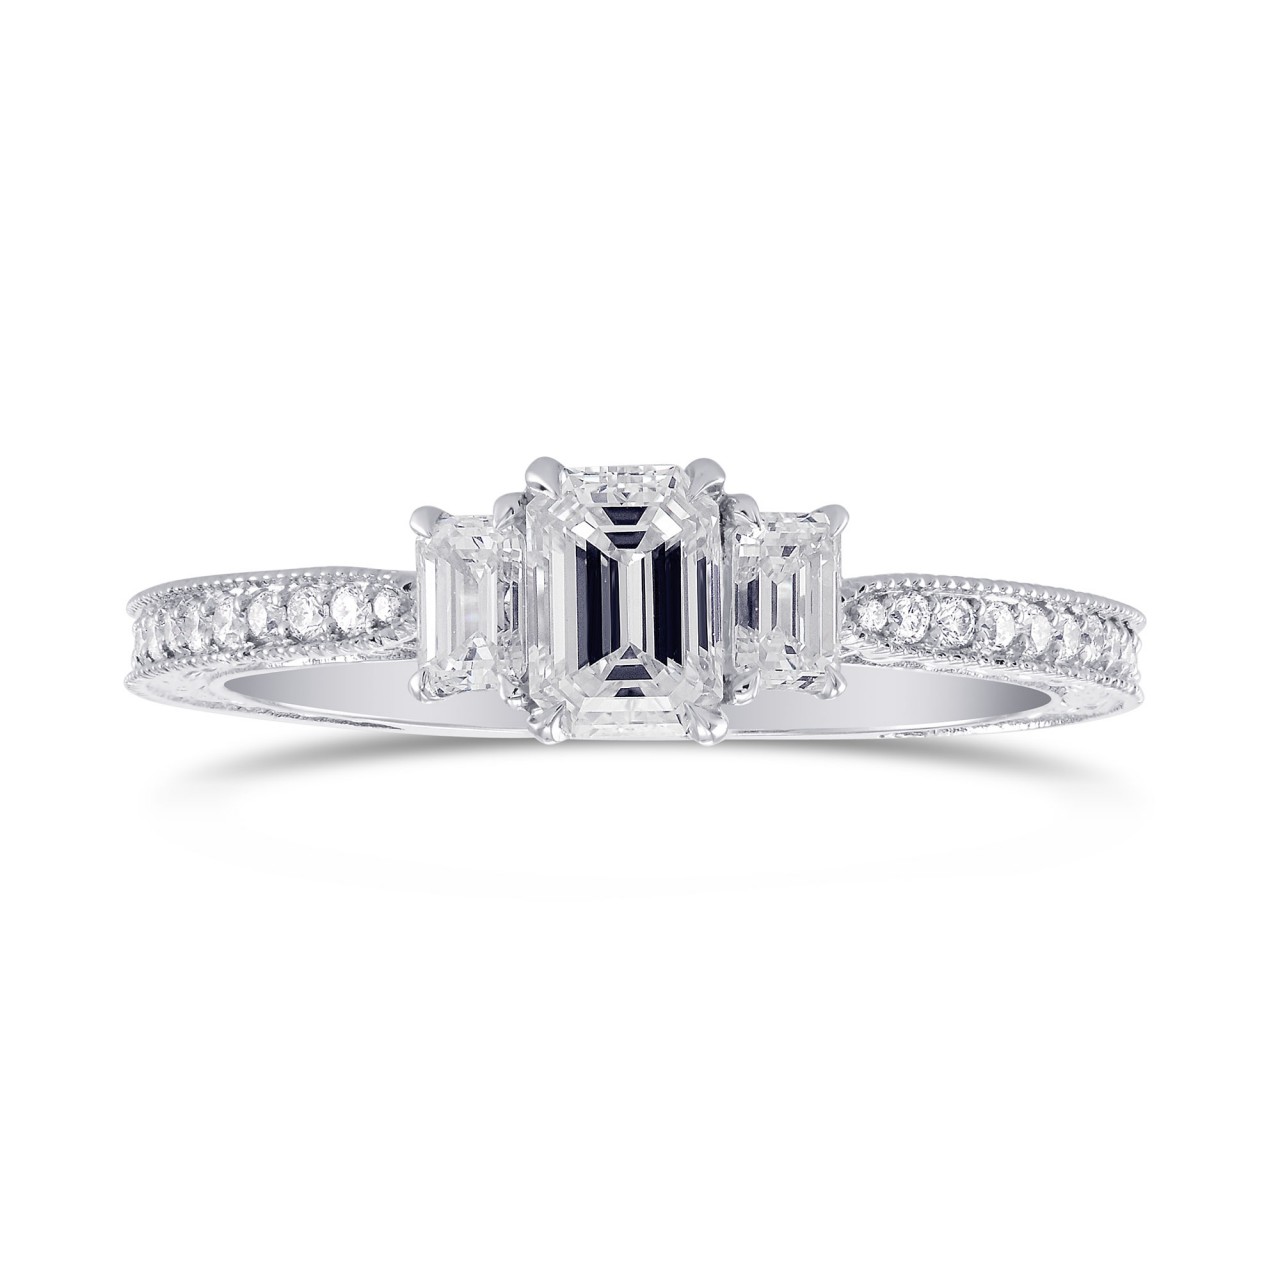 3 Stone Emerald-Cut Diamond Vintage-style Ring, SKU 290258 (0.94Ct TW)